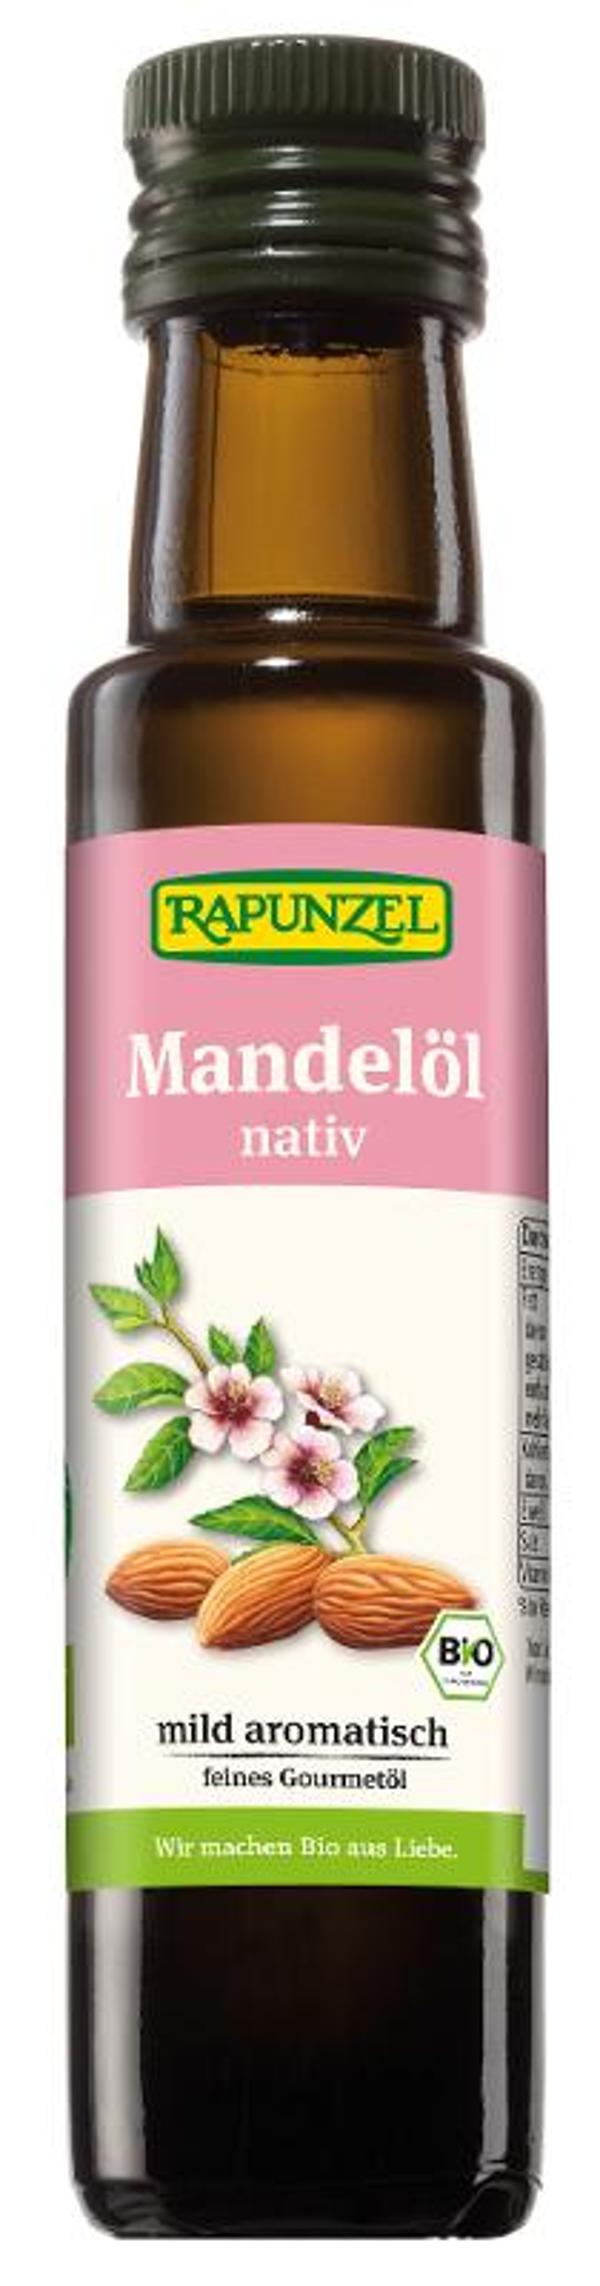 Produktfoto zu Mandelöl nativ